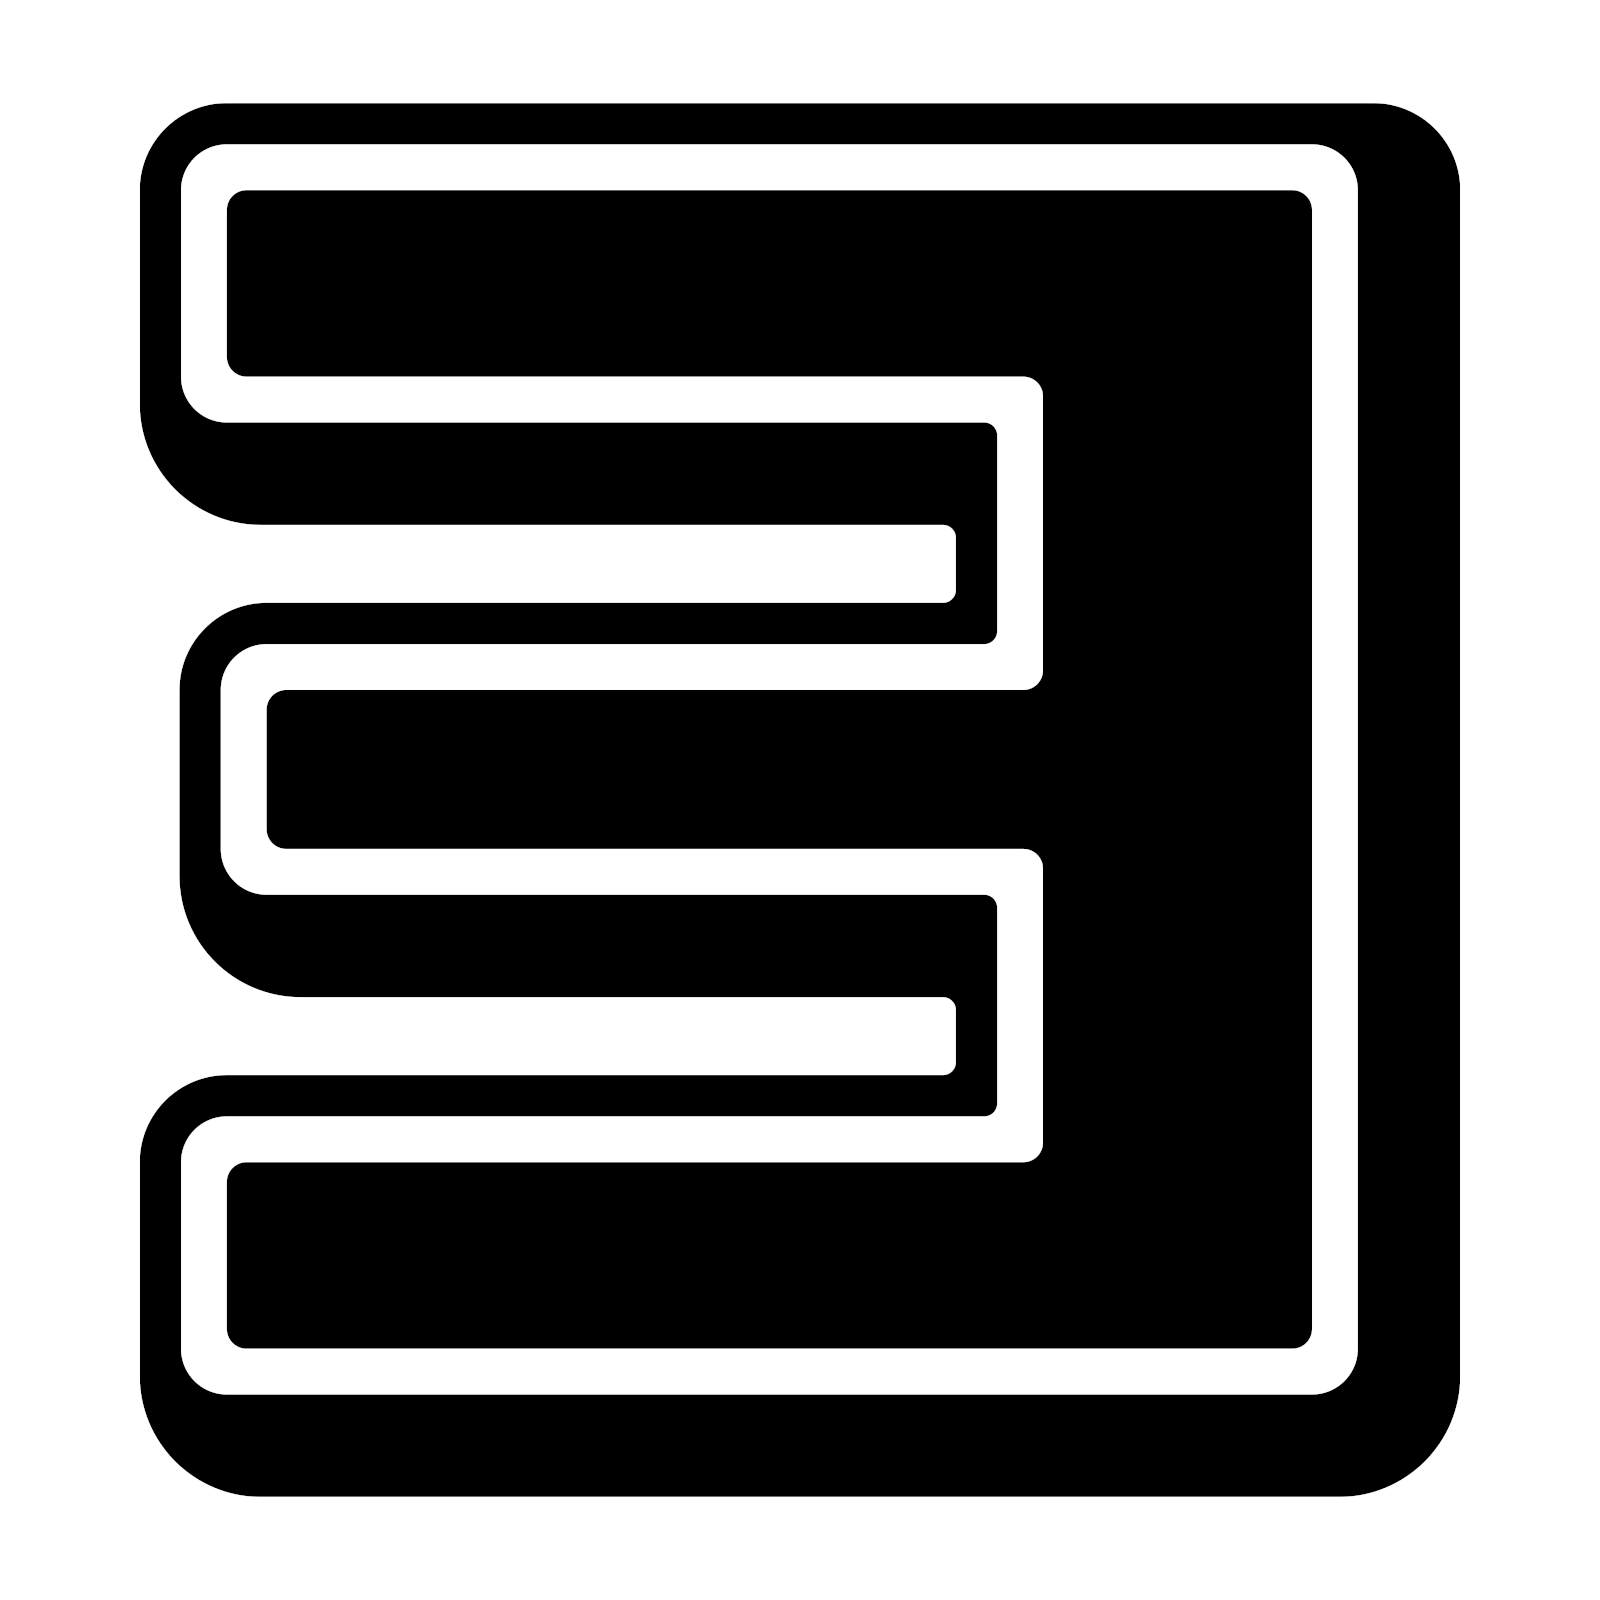 eminem new logo